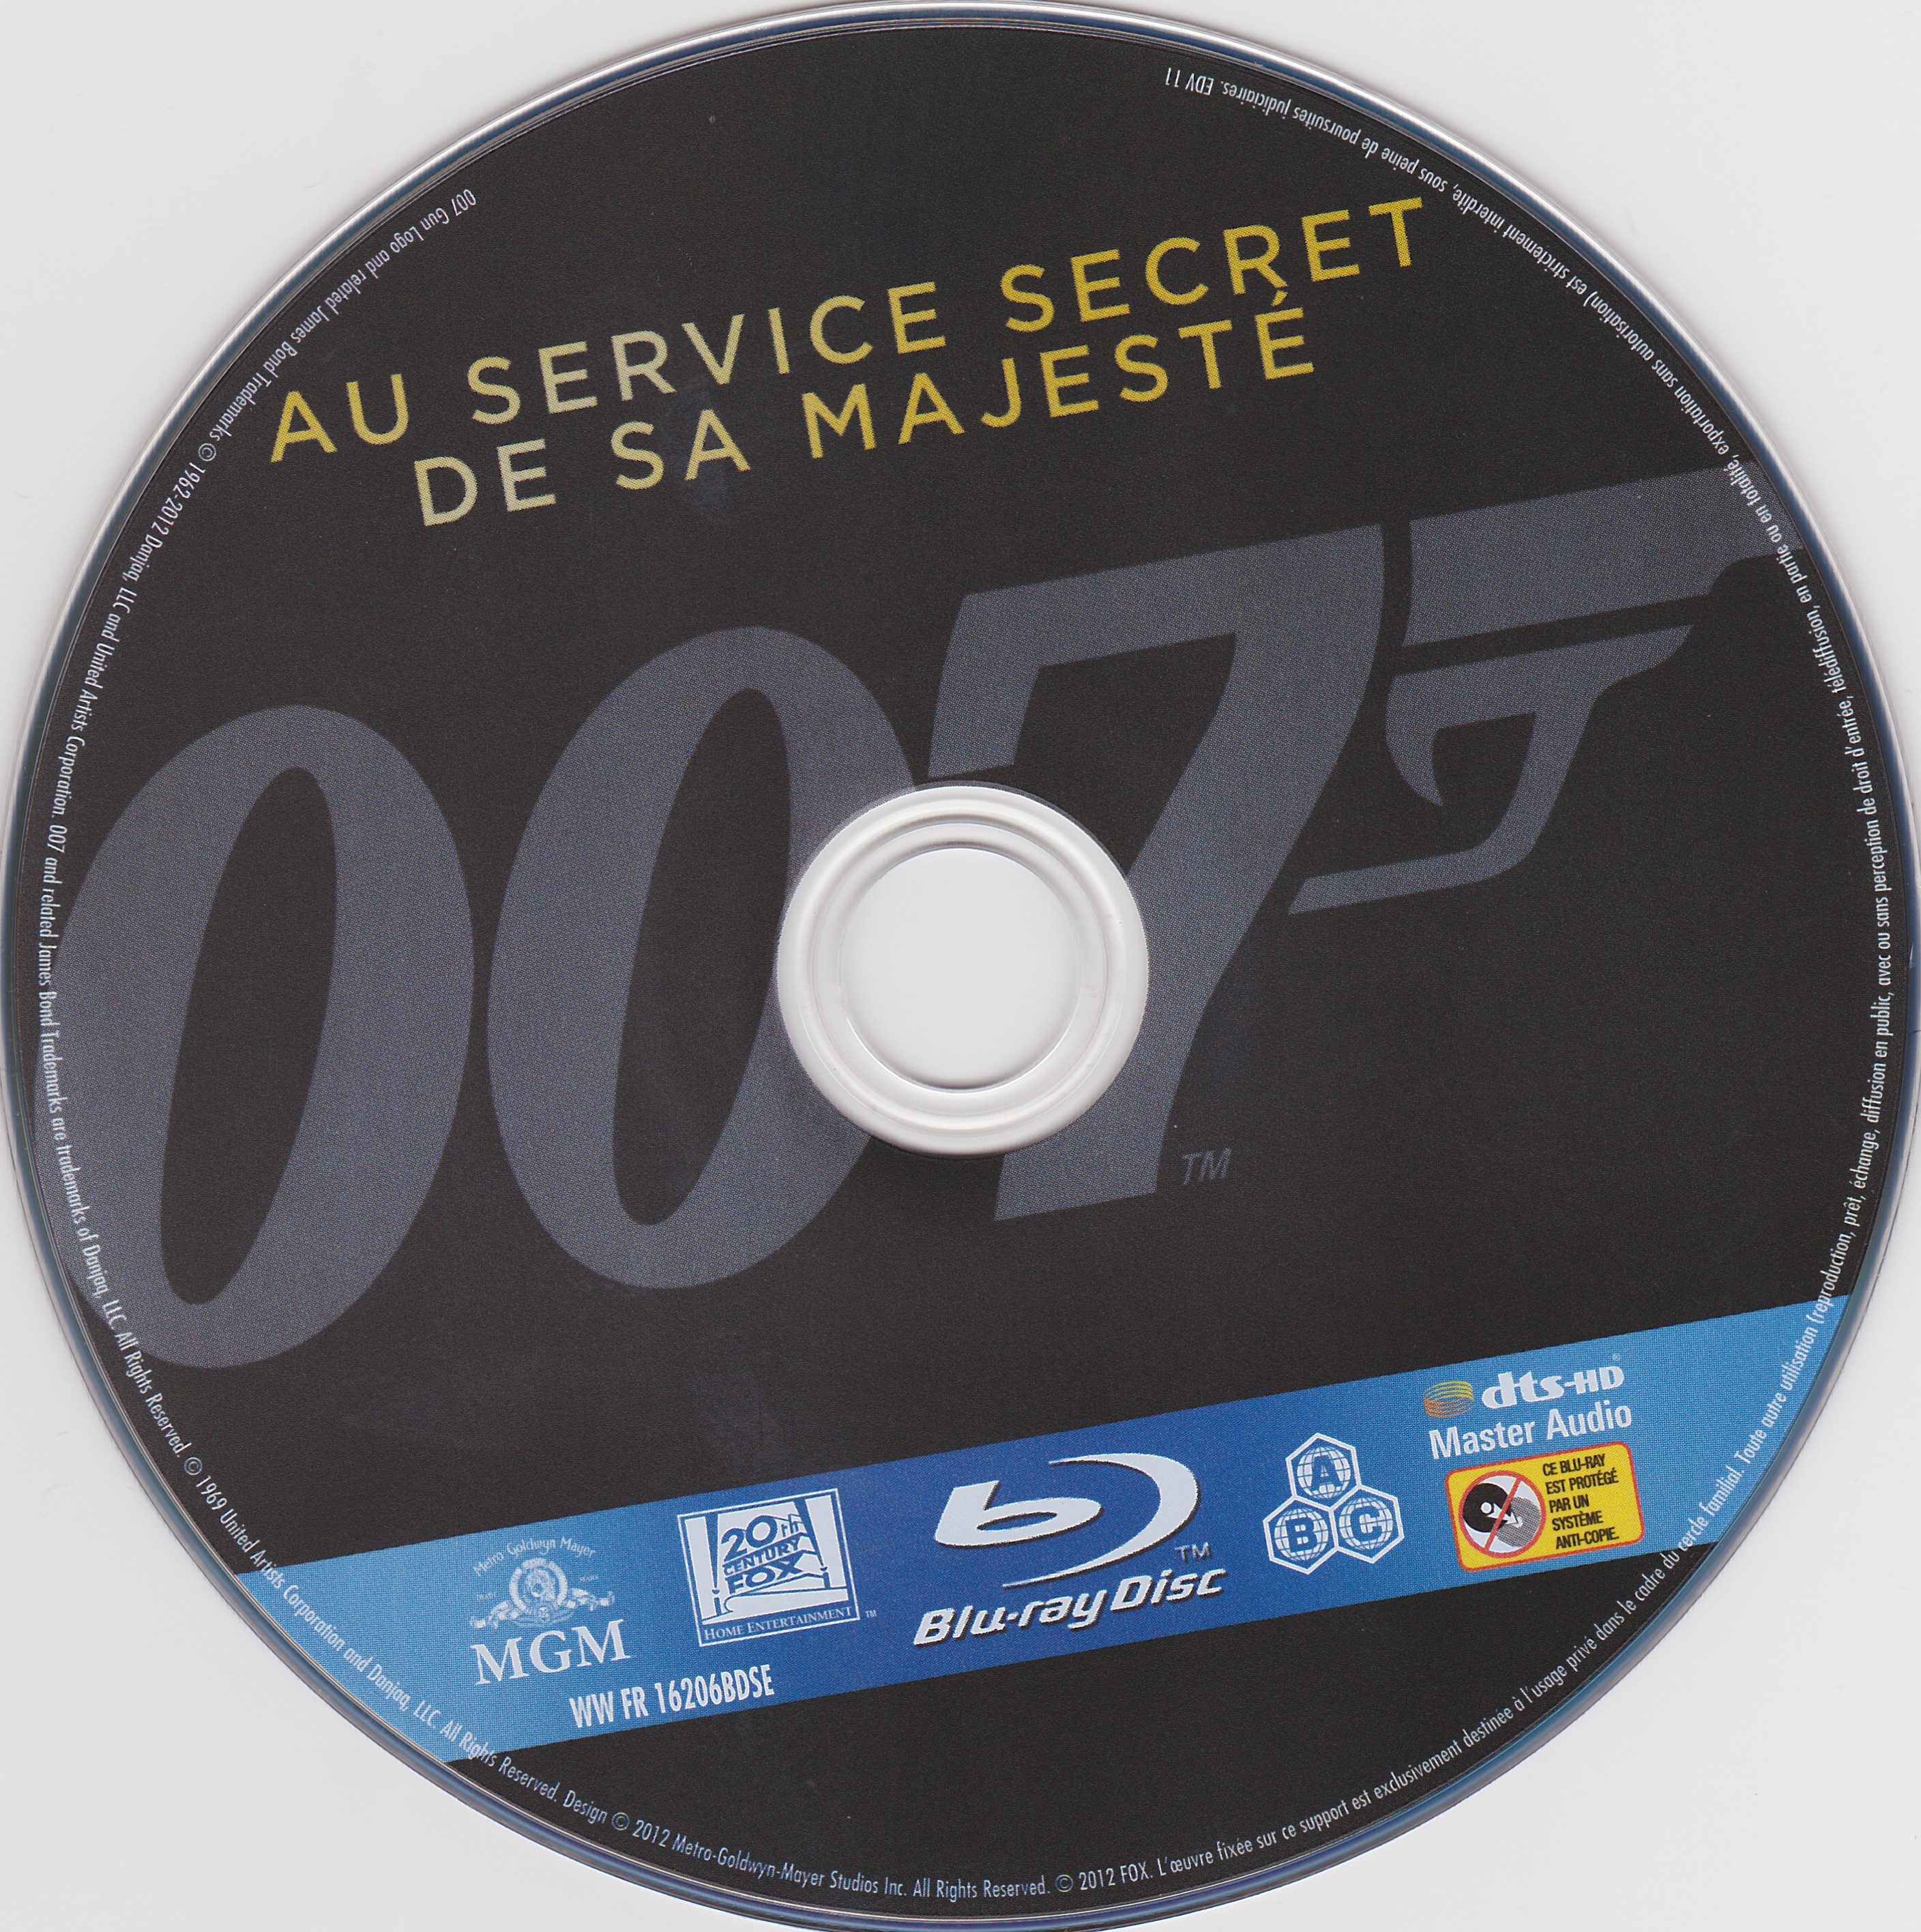 James Bond 007 Au service secret de sa majest (BLU-RAY)